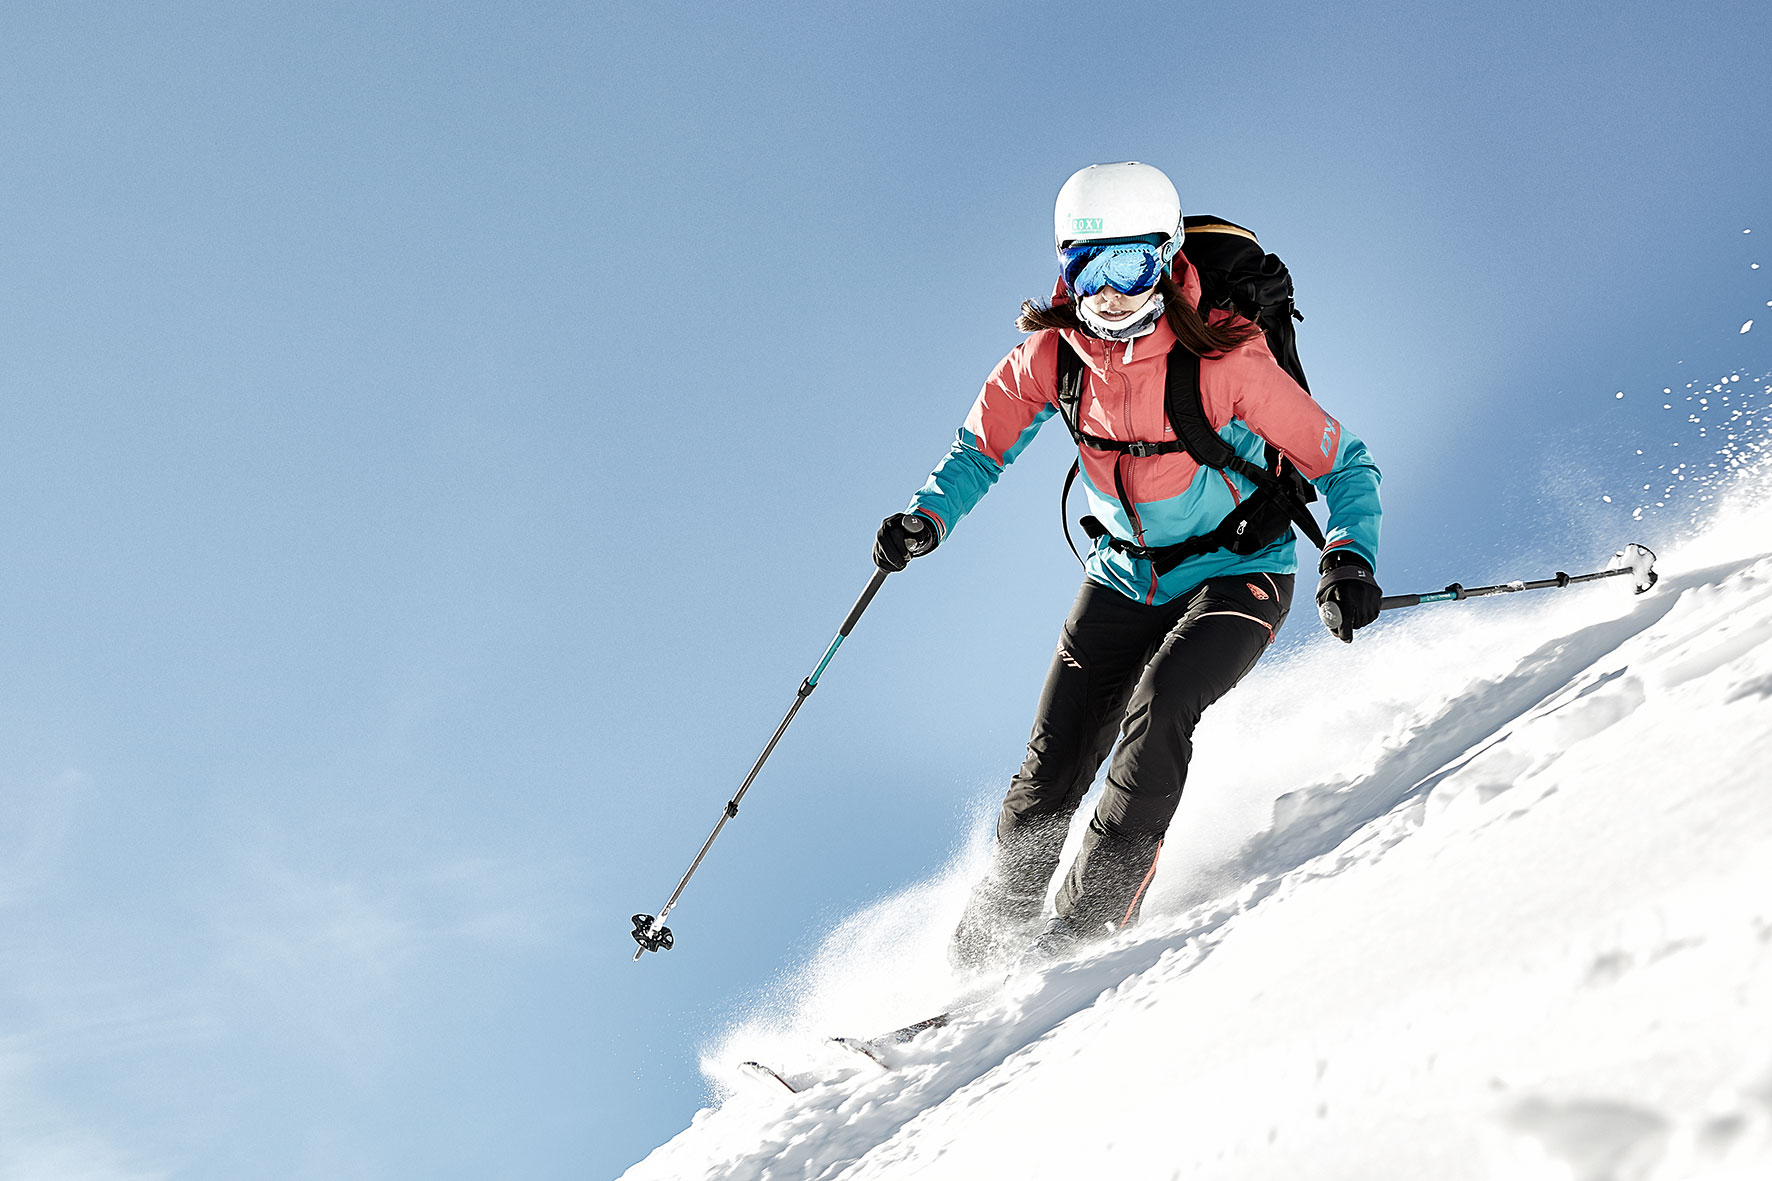 Roxy speeding down a steep mountain slope near Innsbruck, the spray behind her and against a blue sunny sky.